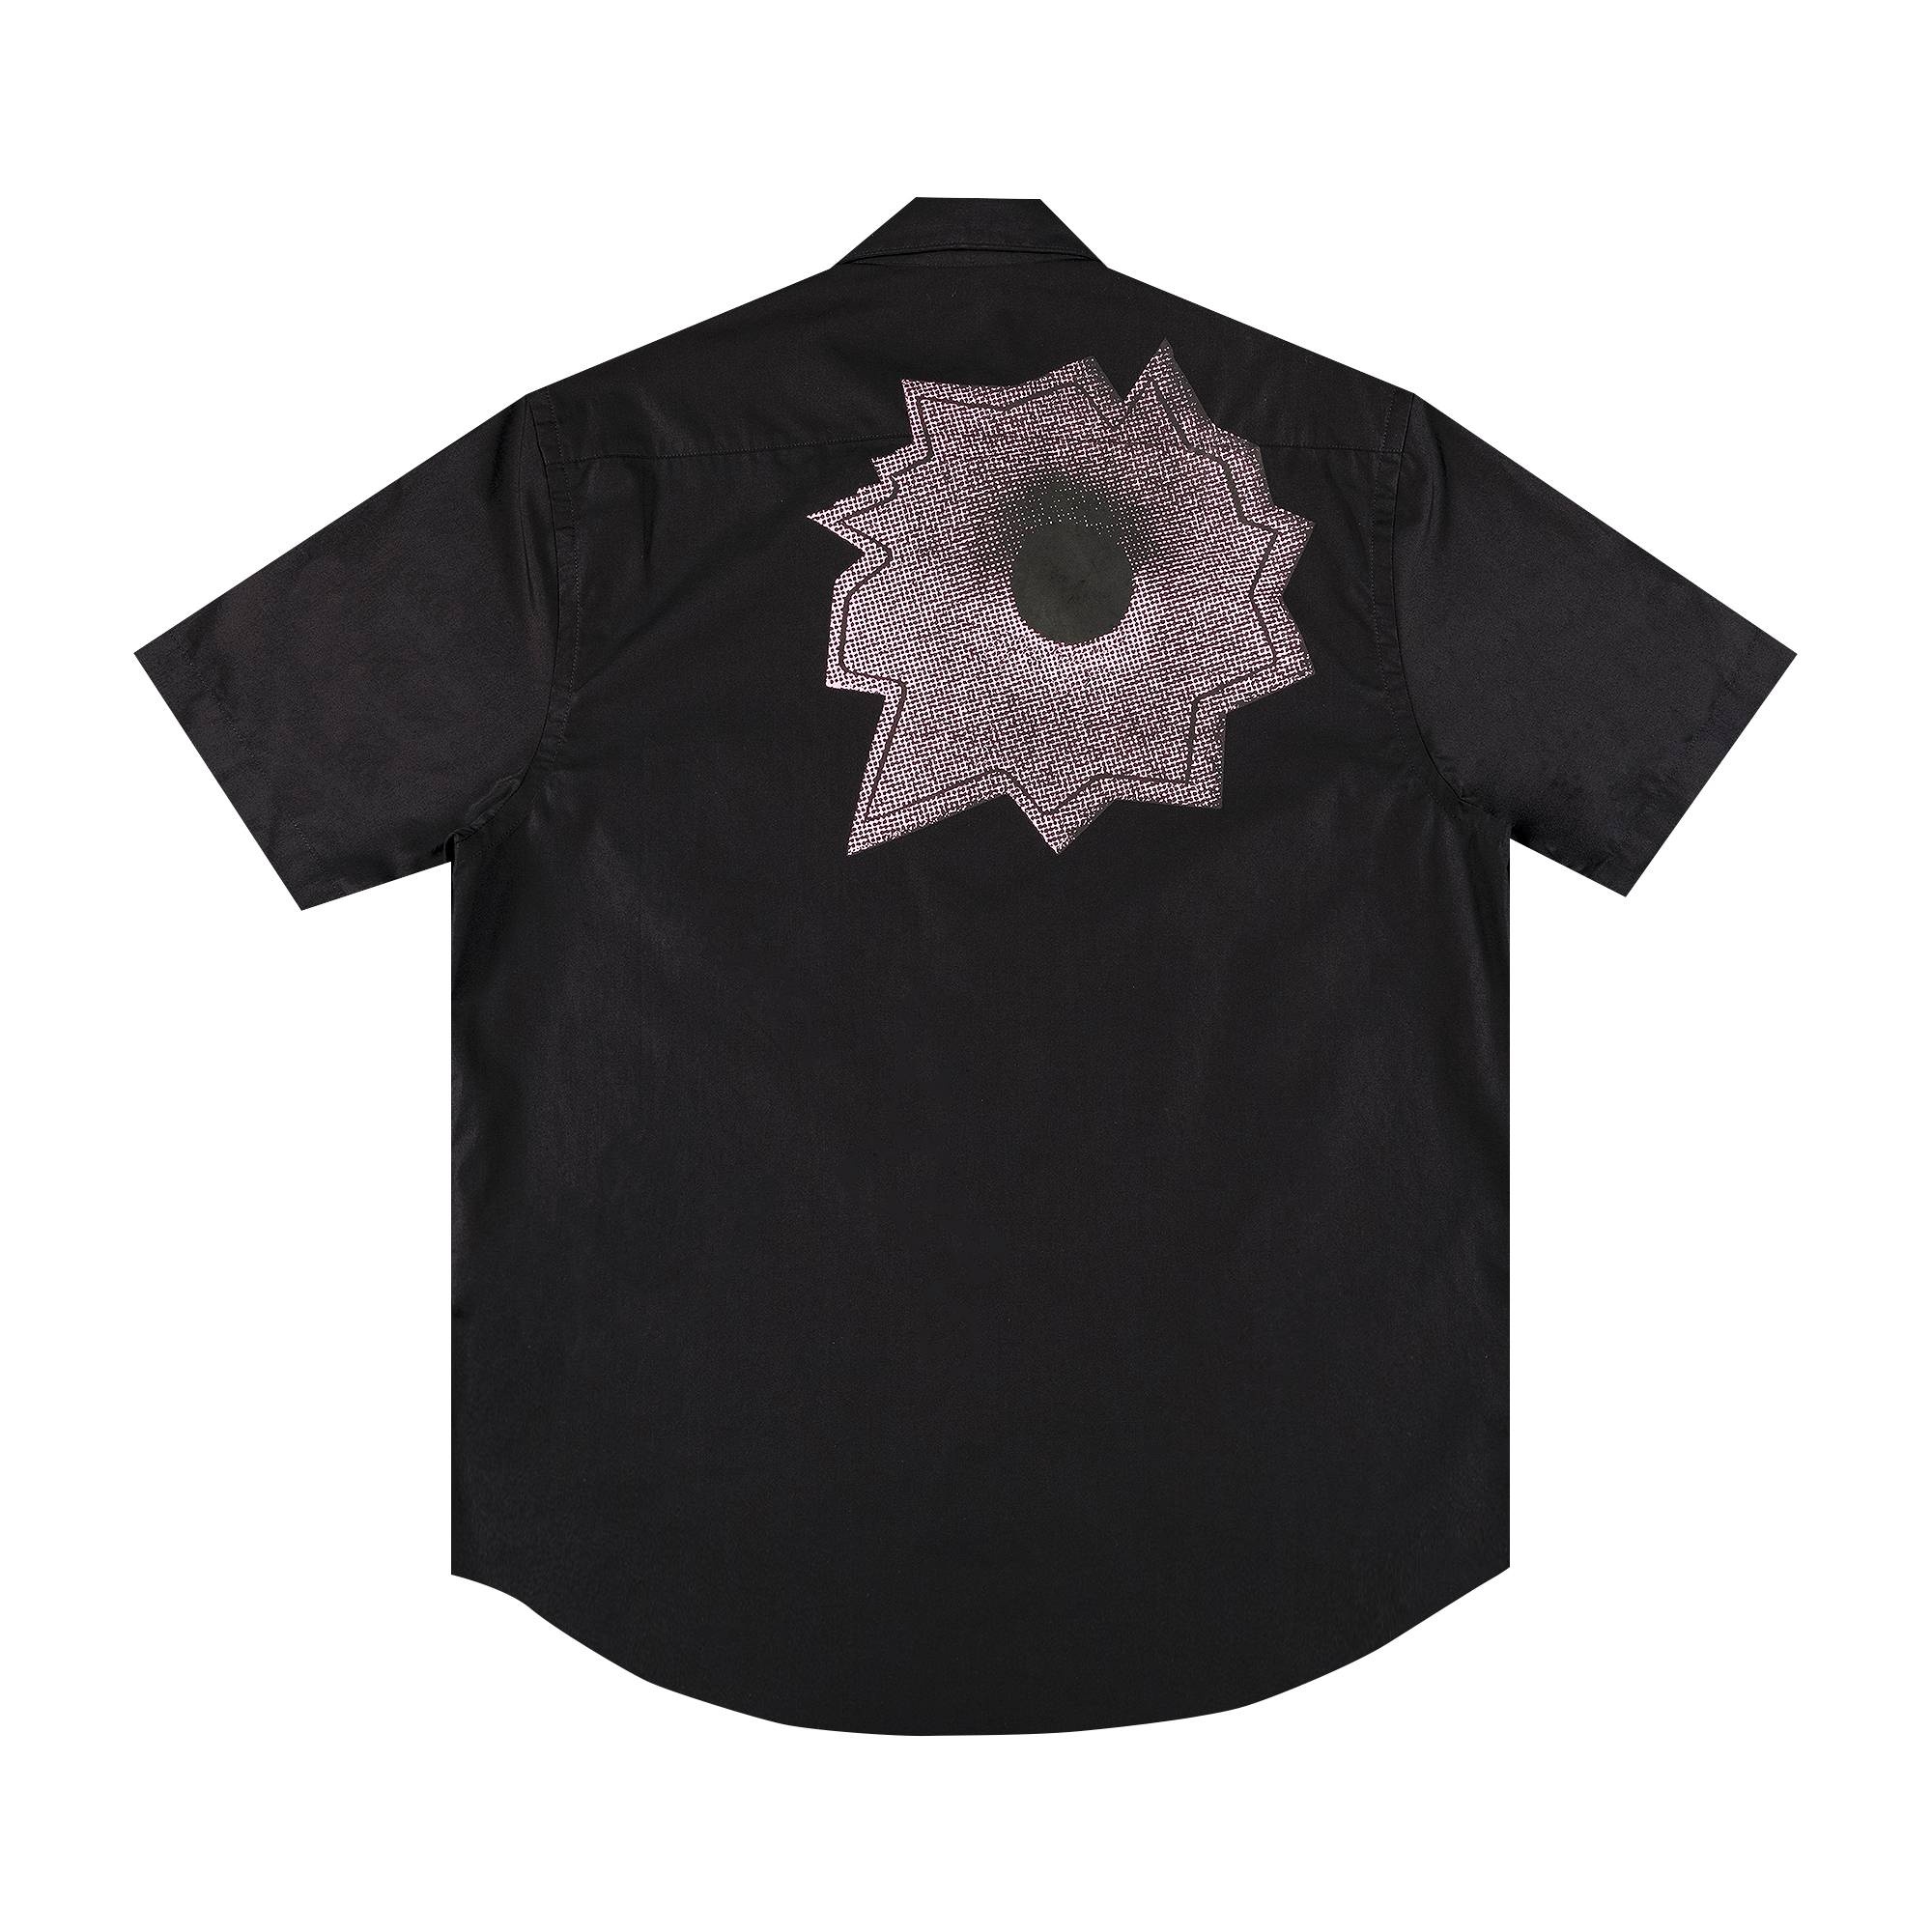 Supreme x Nate Lowman Short-Sleeve Shirt 'Black' - 2